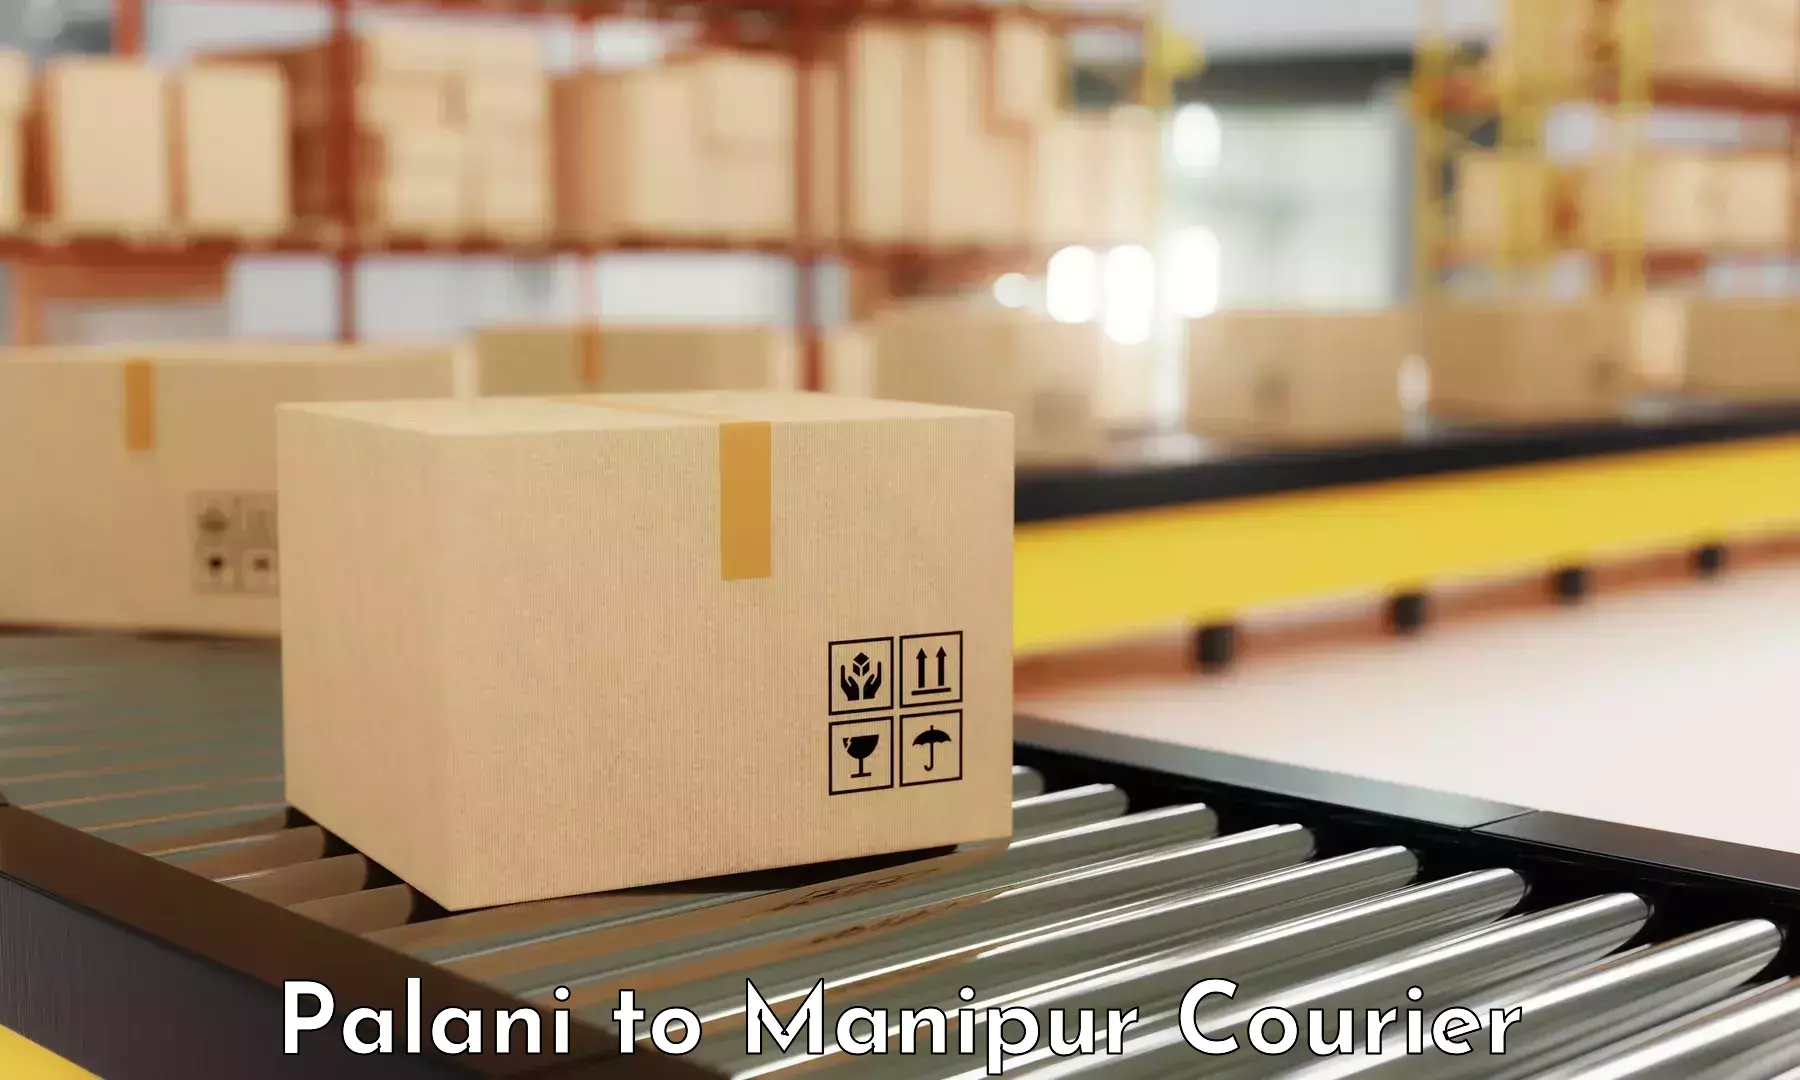 Logistics service provider Palani to Kanti